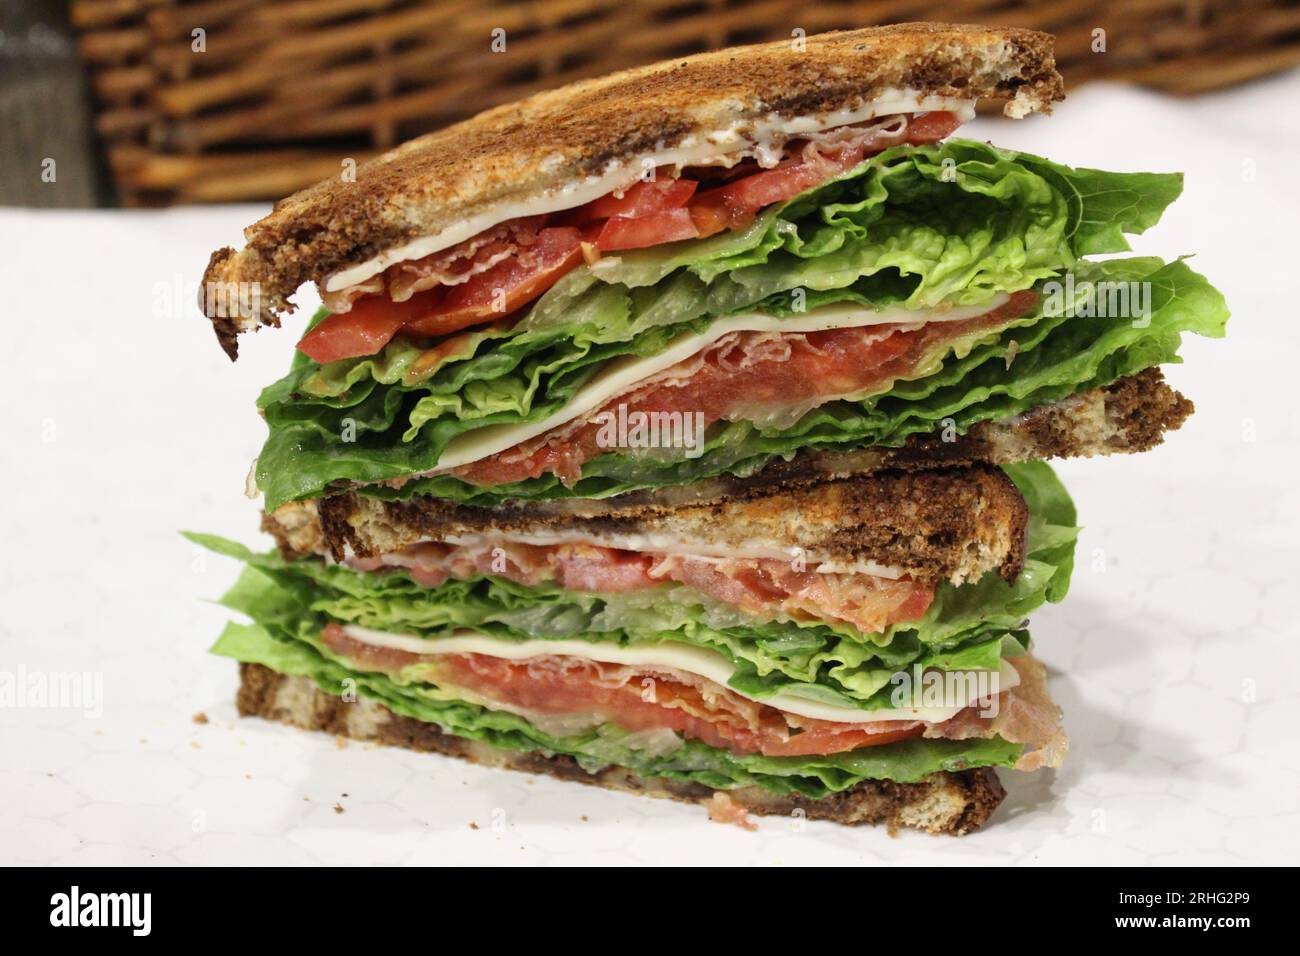 a tasty BLT sandwich on rye toast Stock Photo